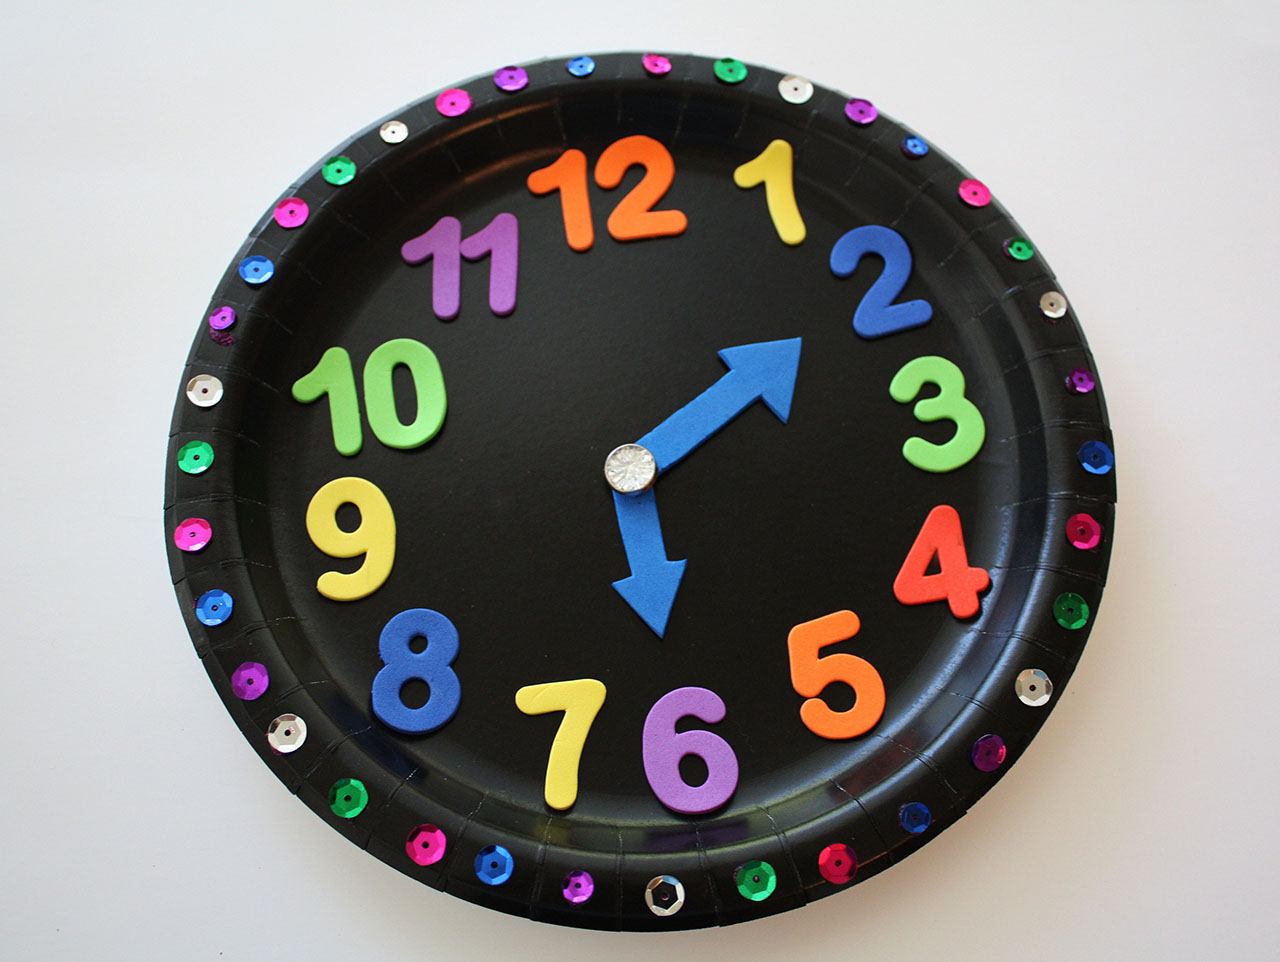 New Year's Eve Countdown Clock Craft